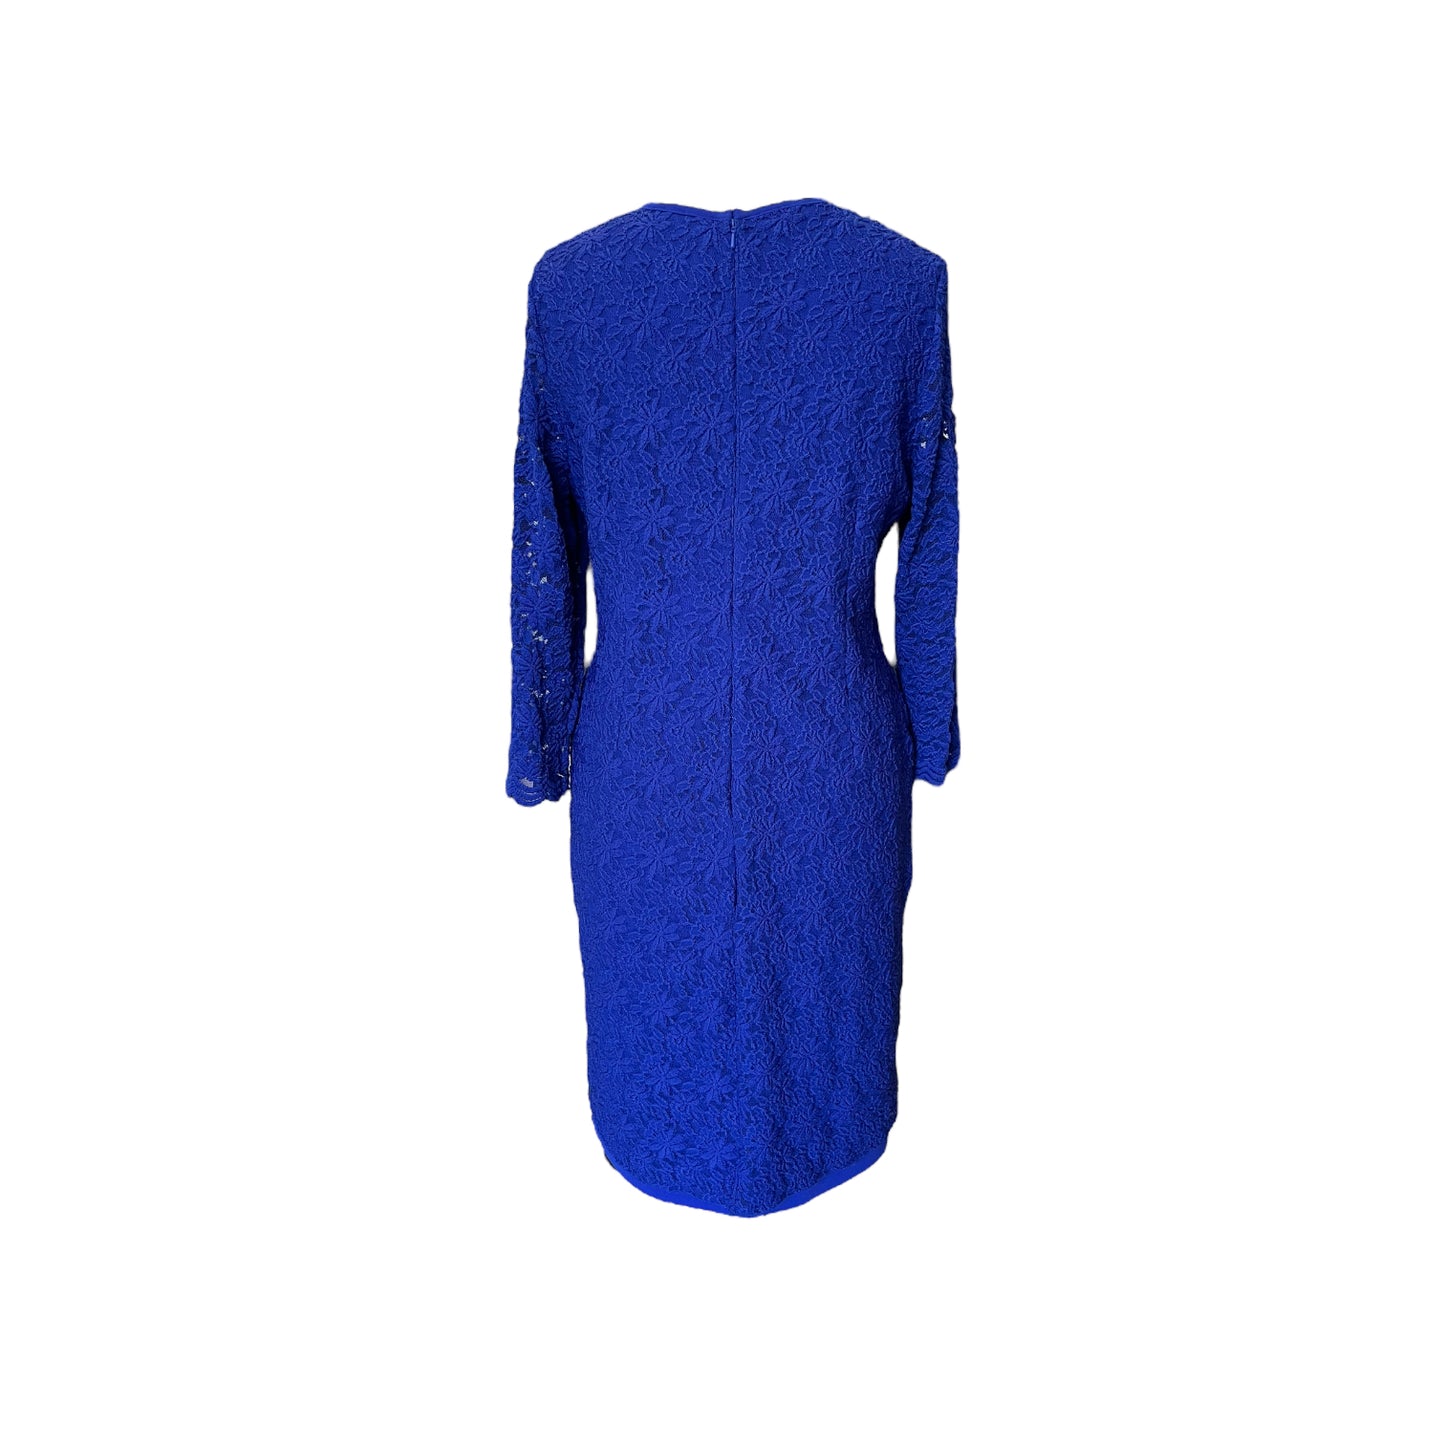 Gina Bacconi Cobalt Blue Lace Dress